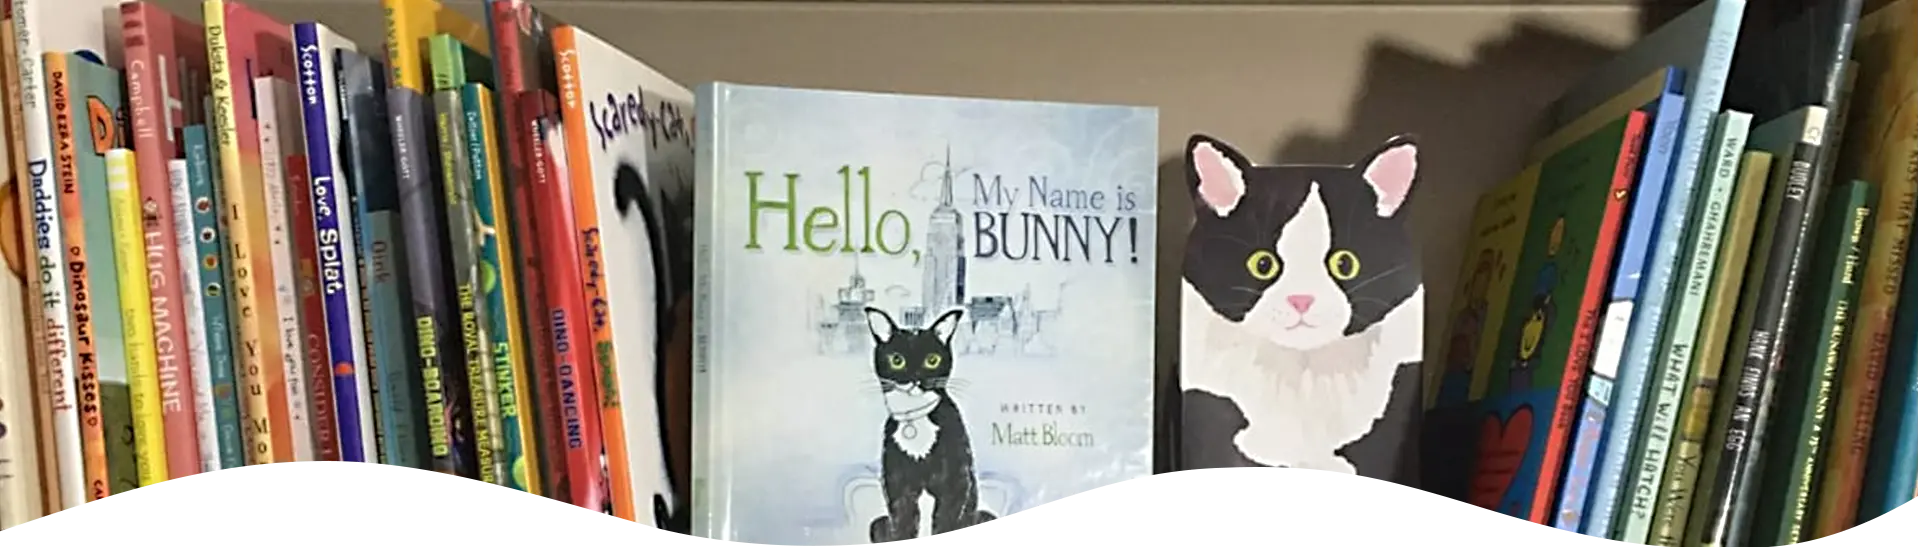 Hello My Name is Bunny London, Award Winning Children's Book Series Bookshelf